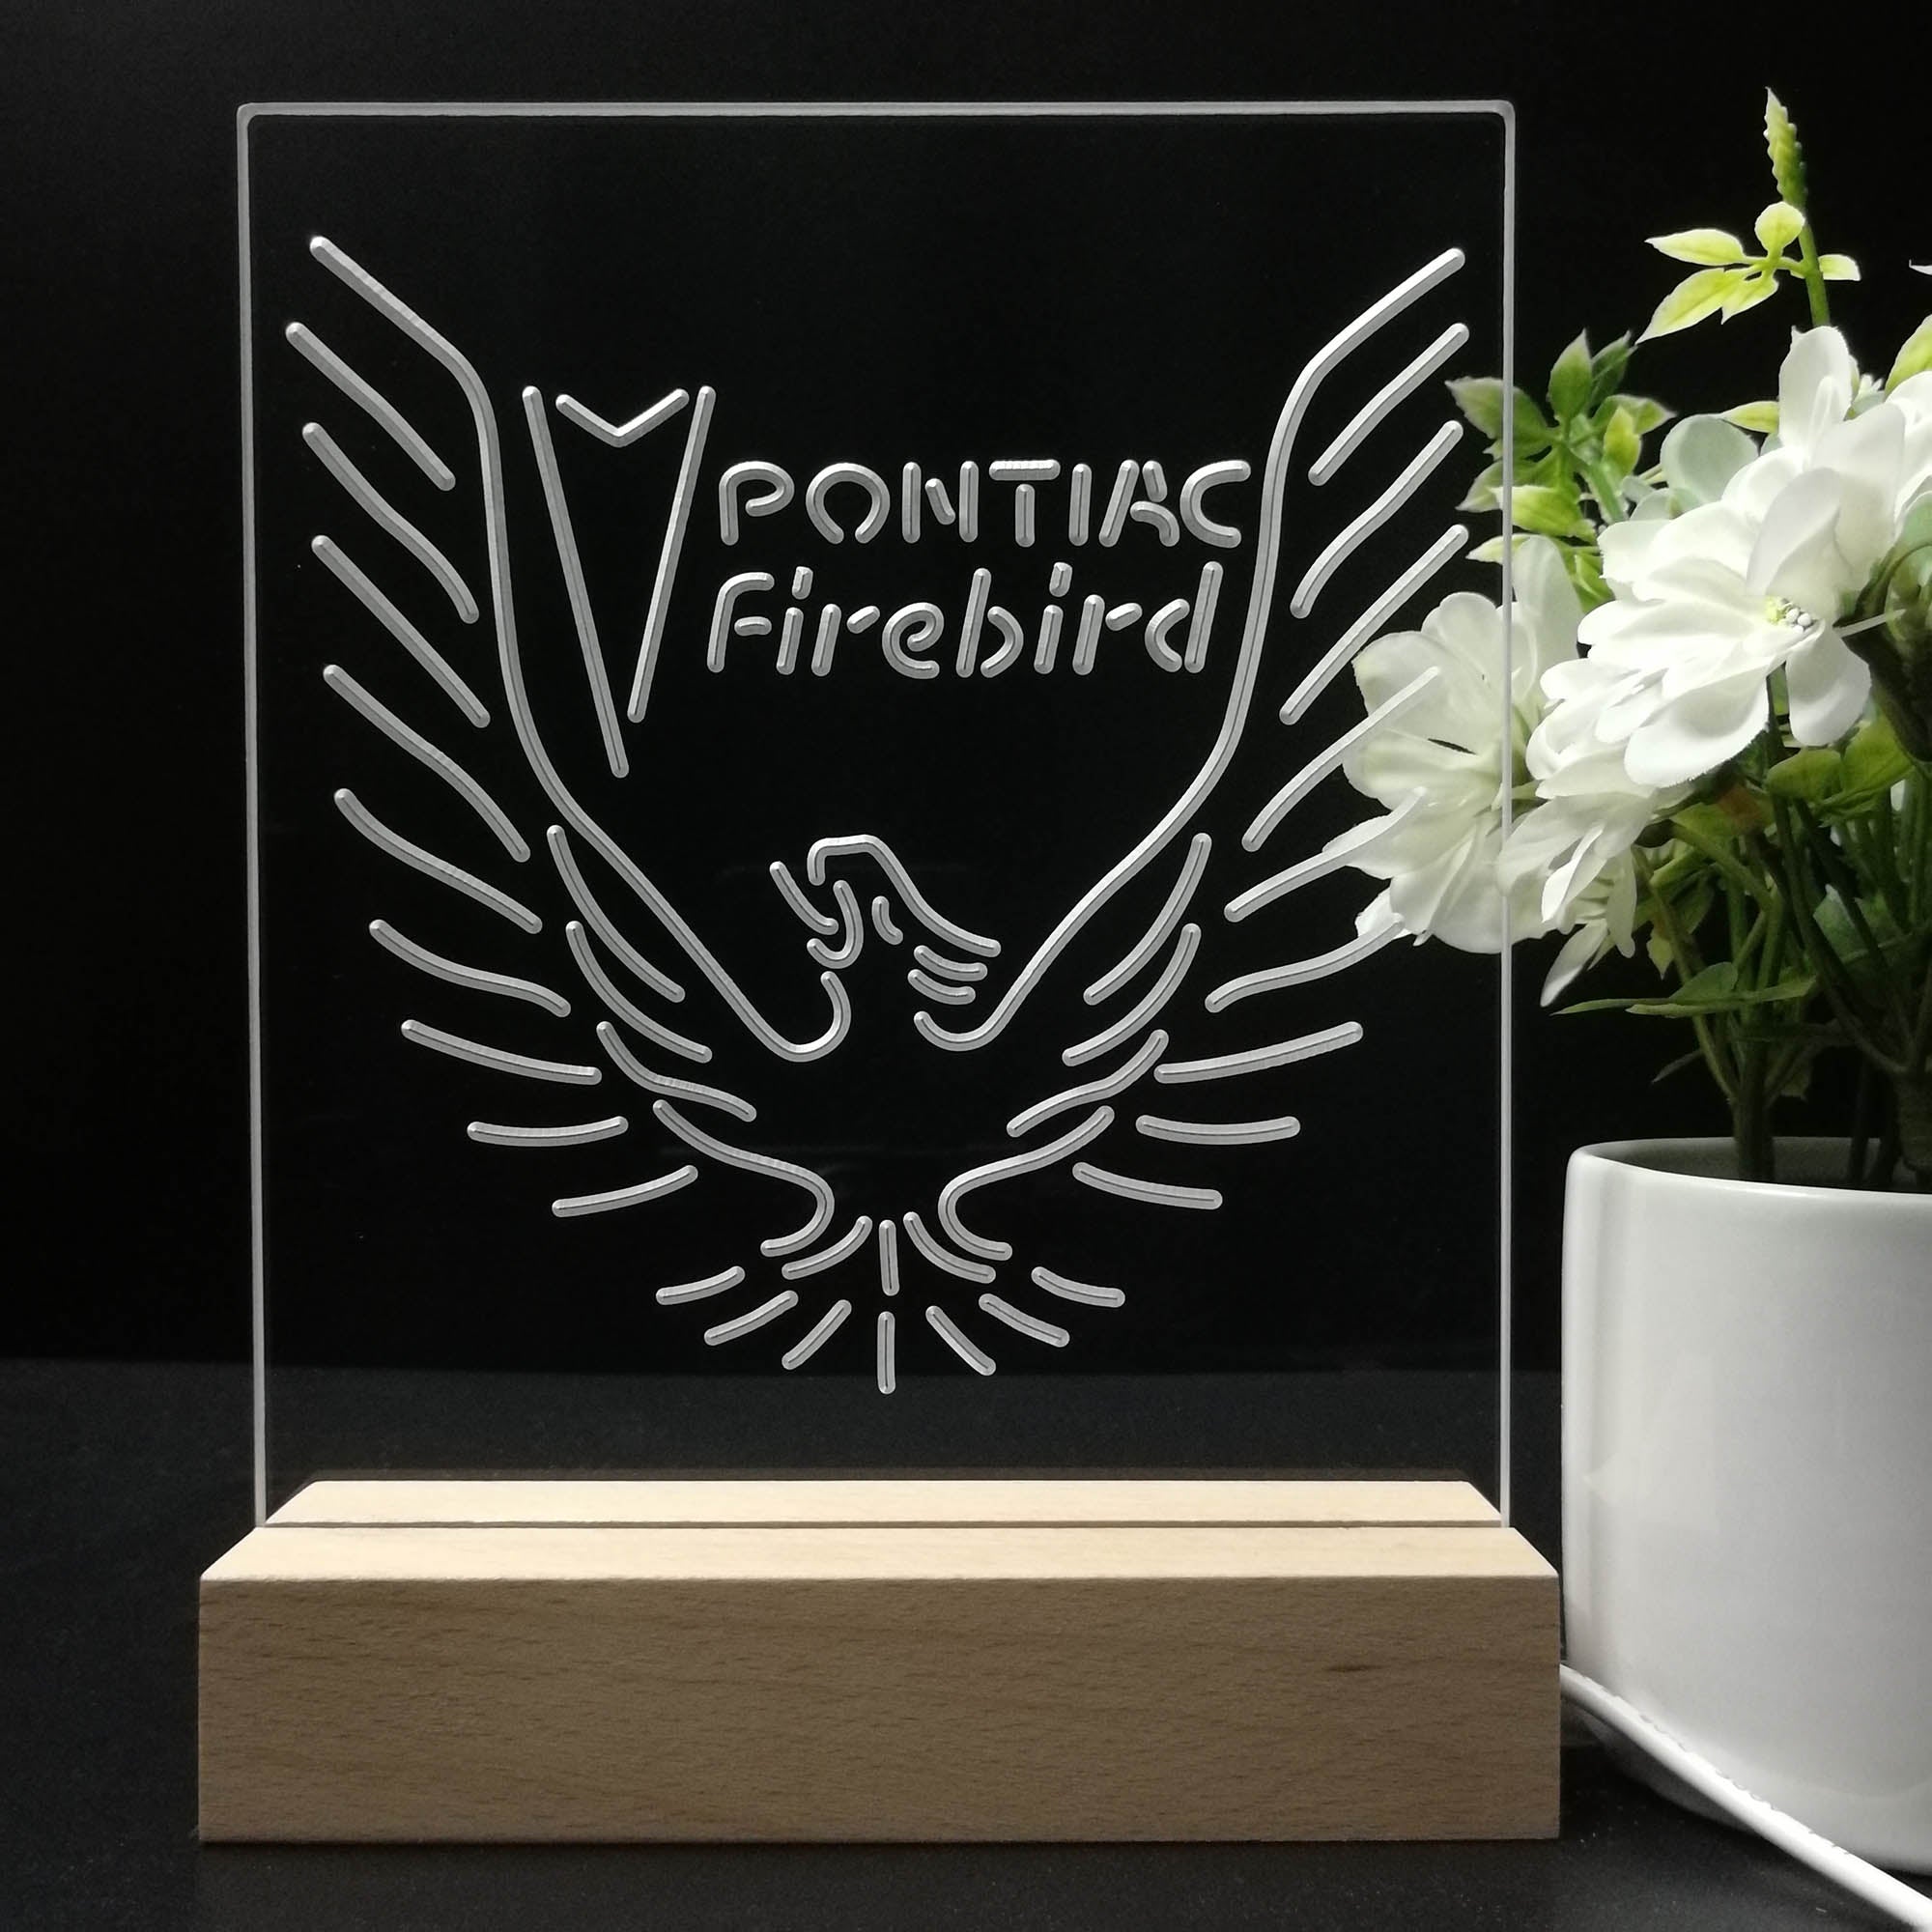 Pontiacs Firebirds 3D LED Illusion Night Light